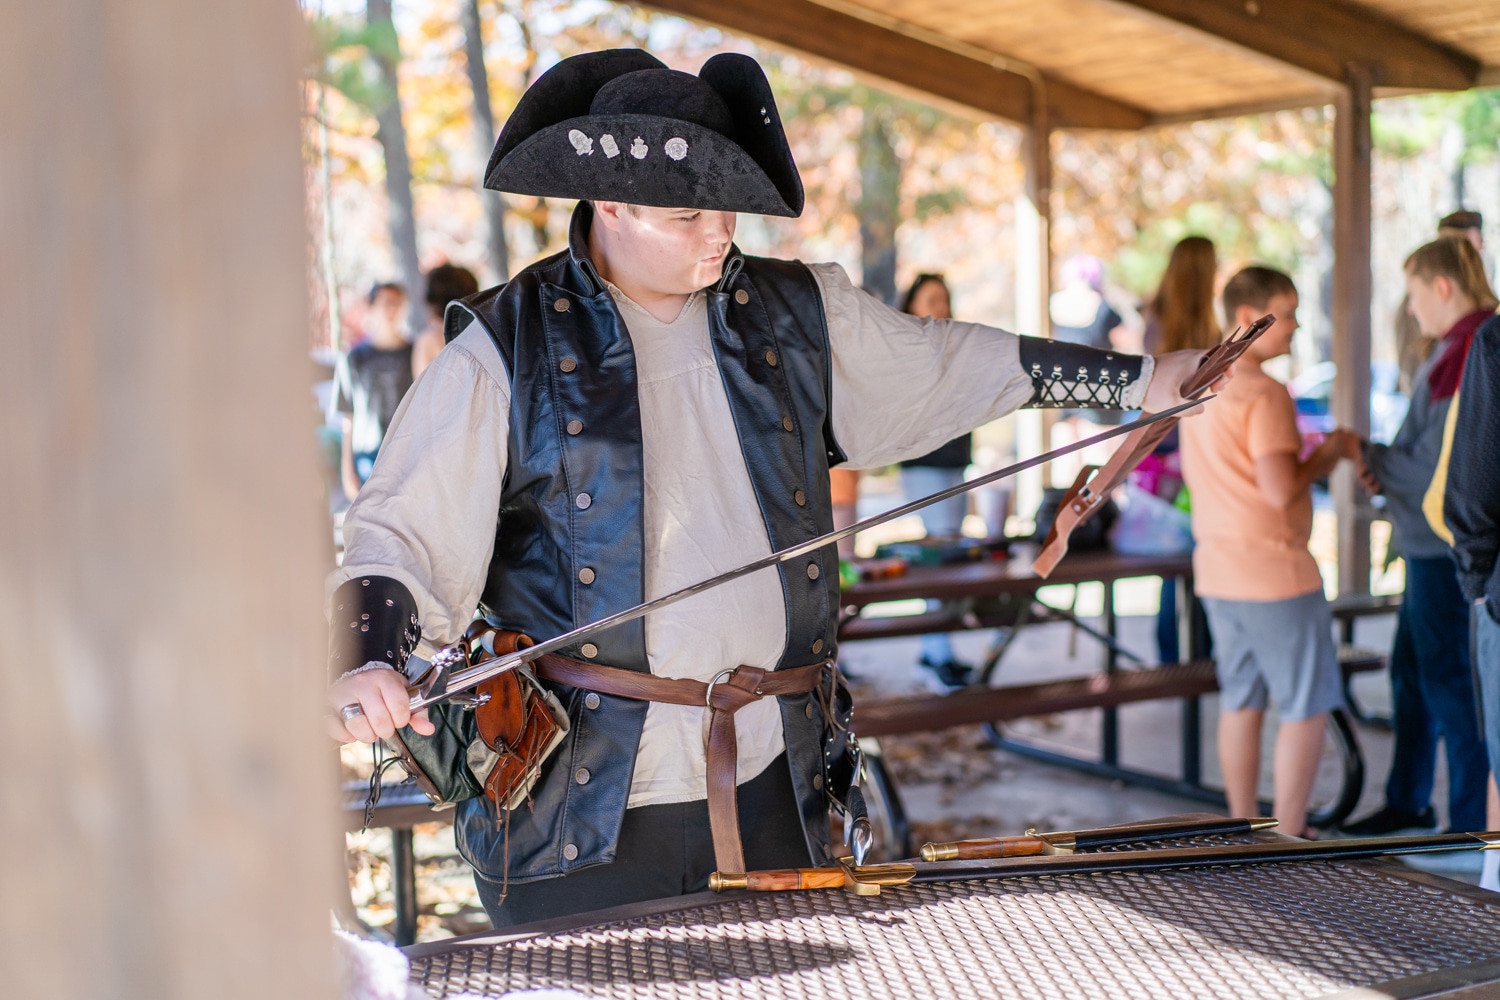 Teenage pirate cosplayer examines replica sword at the Arkansas Renaissance Festival.